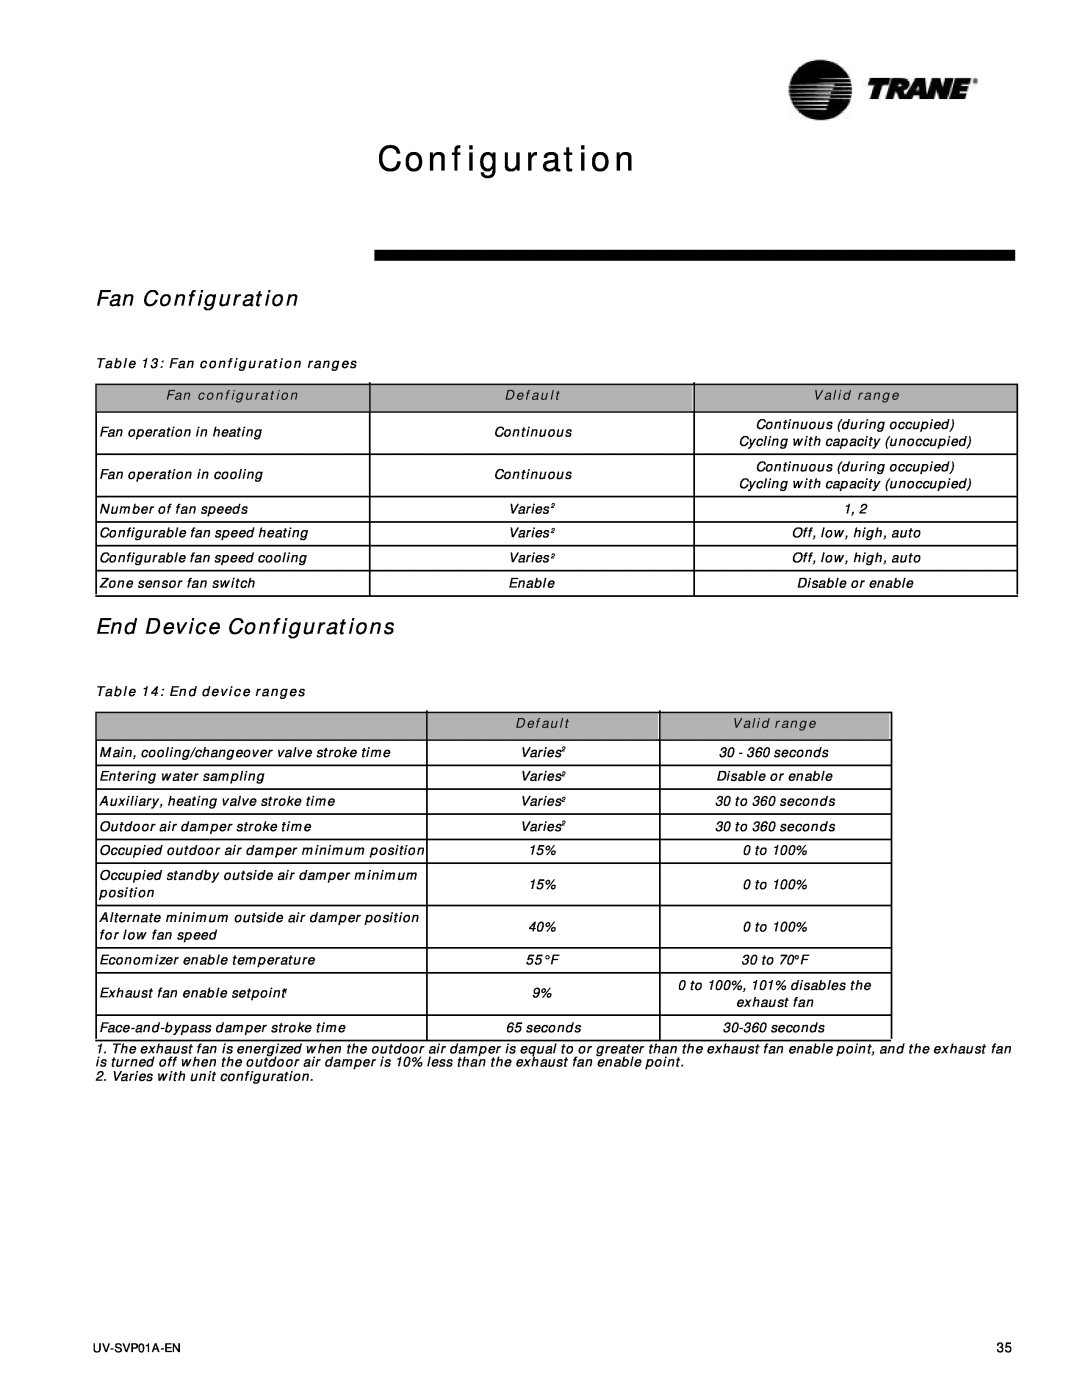 Trane ZN.520 manual Configuration, Fan configuration ranges Fan configuration, Default, Valid range, End device ranges 